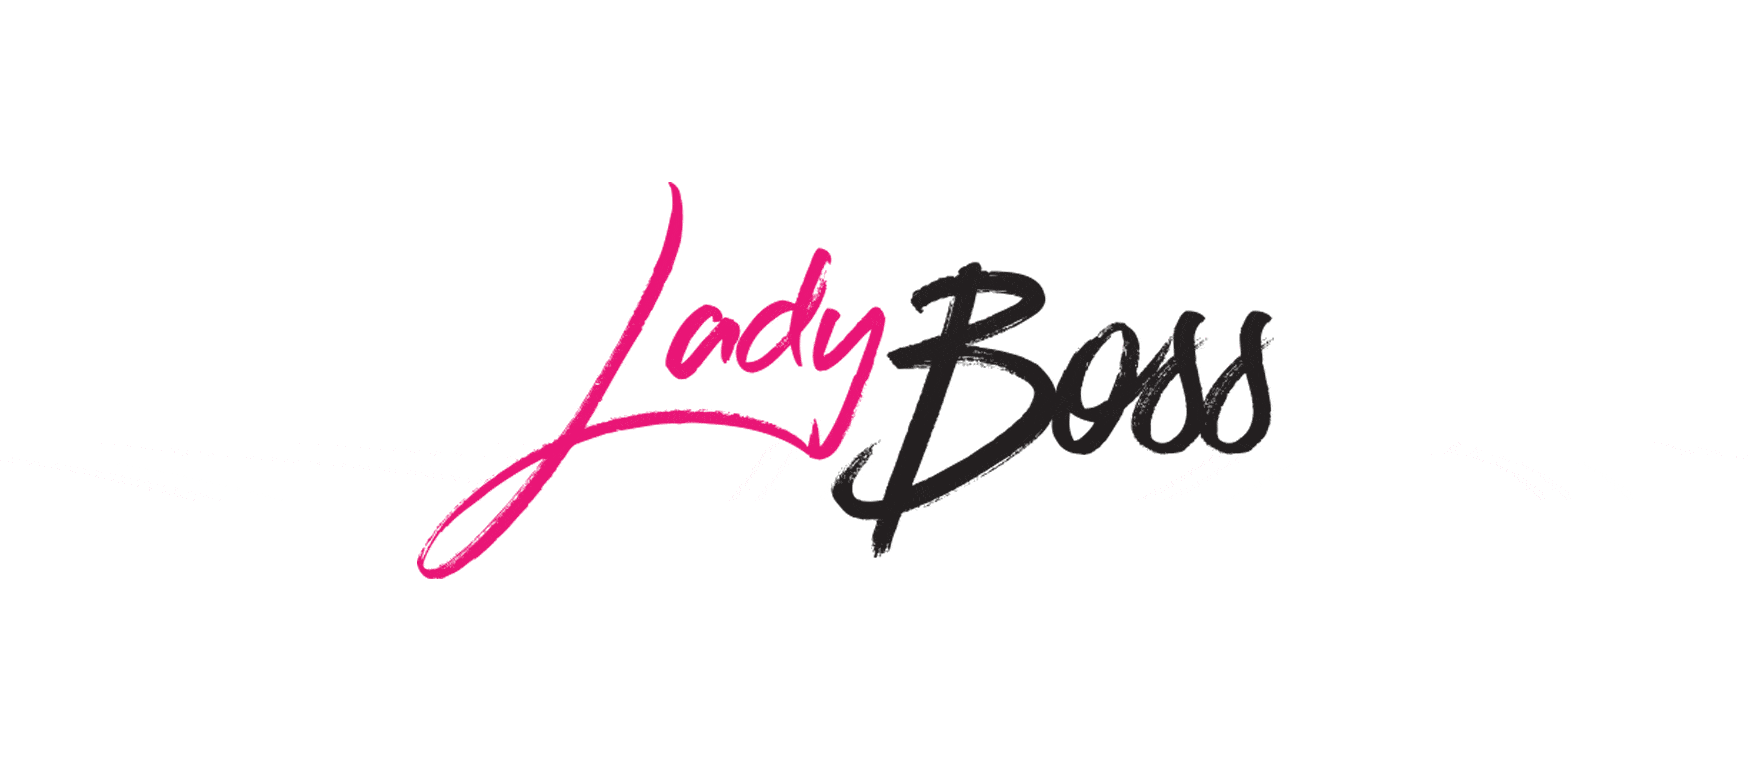 lady boss swag